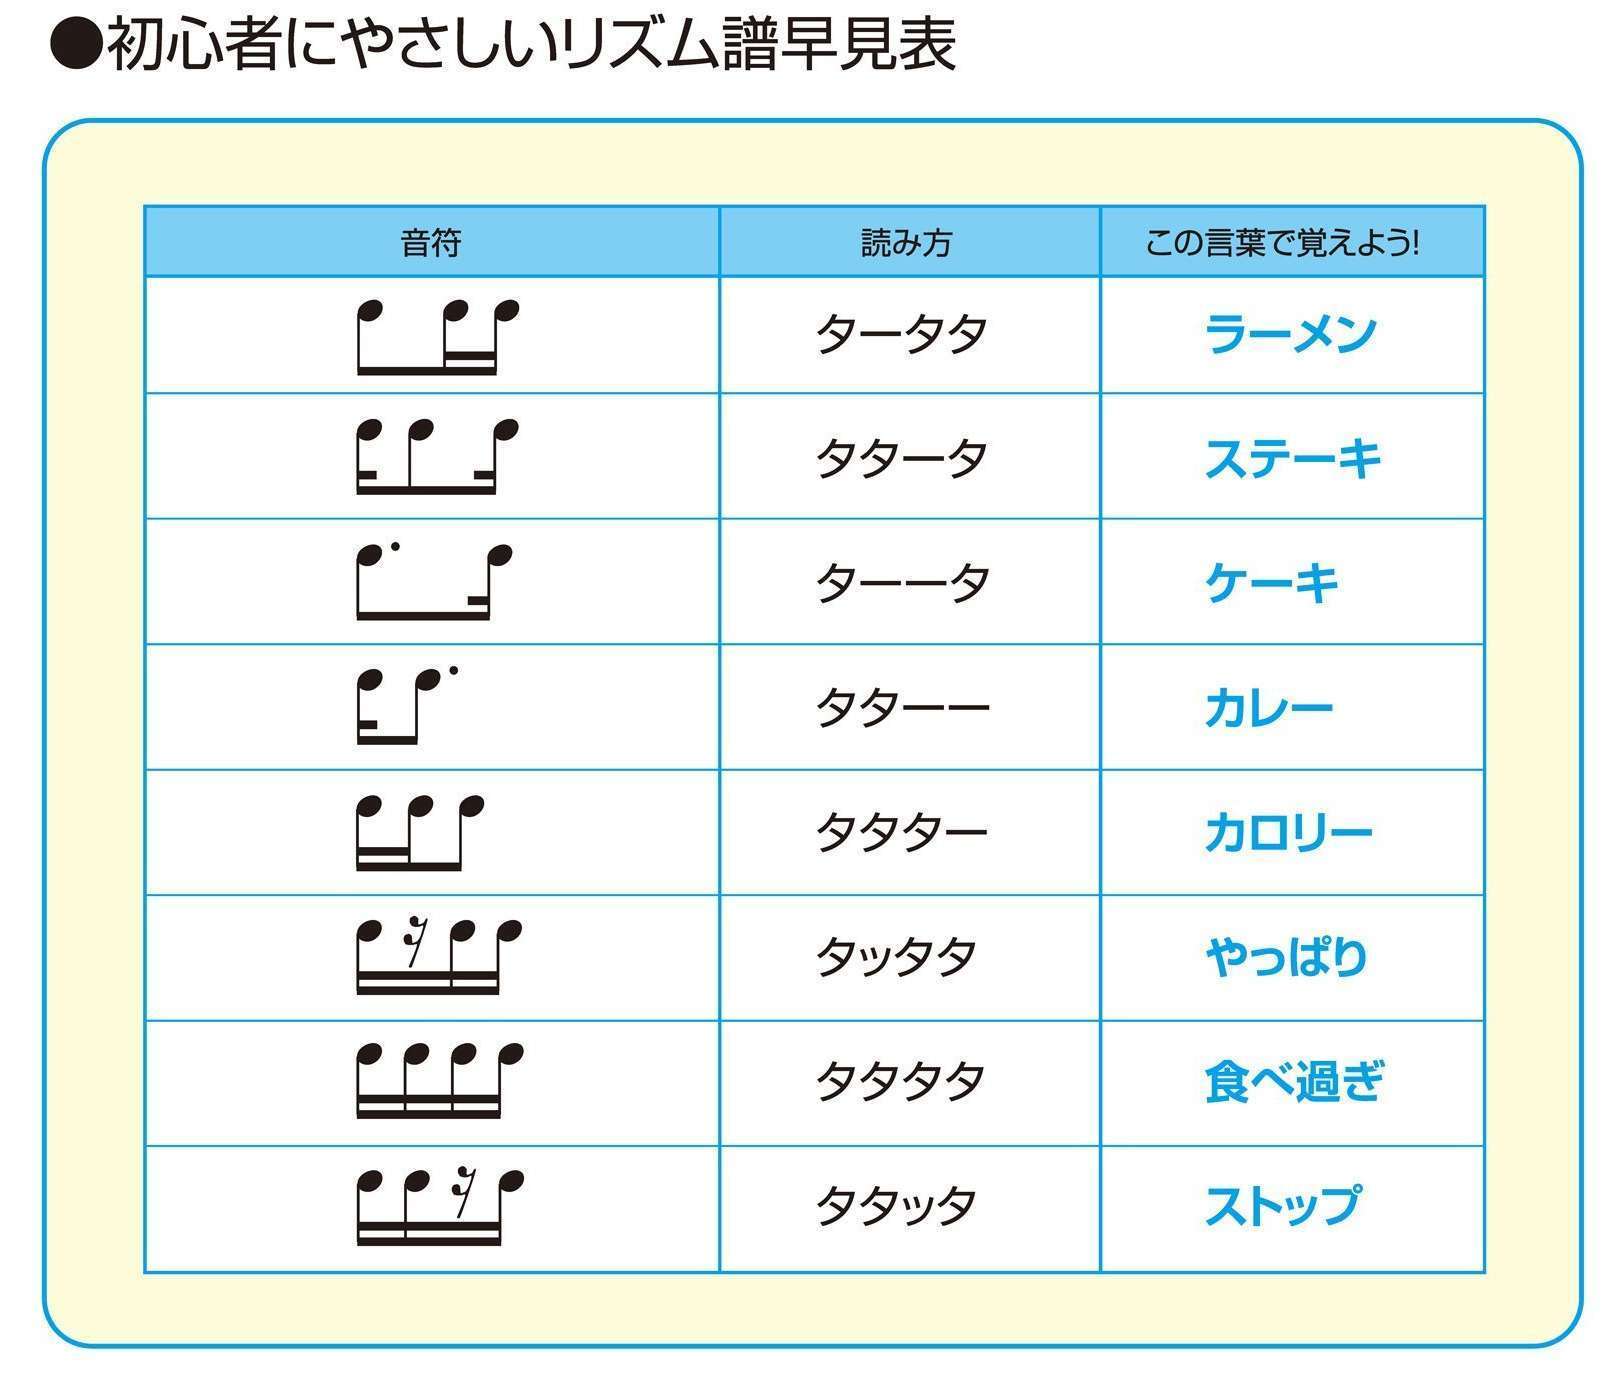 Tab譜は読めるが リズム譜の読み方がわからない Kasumi 音楽な日々の あれこれ